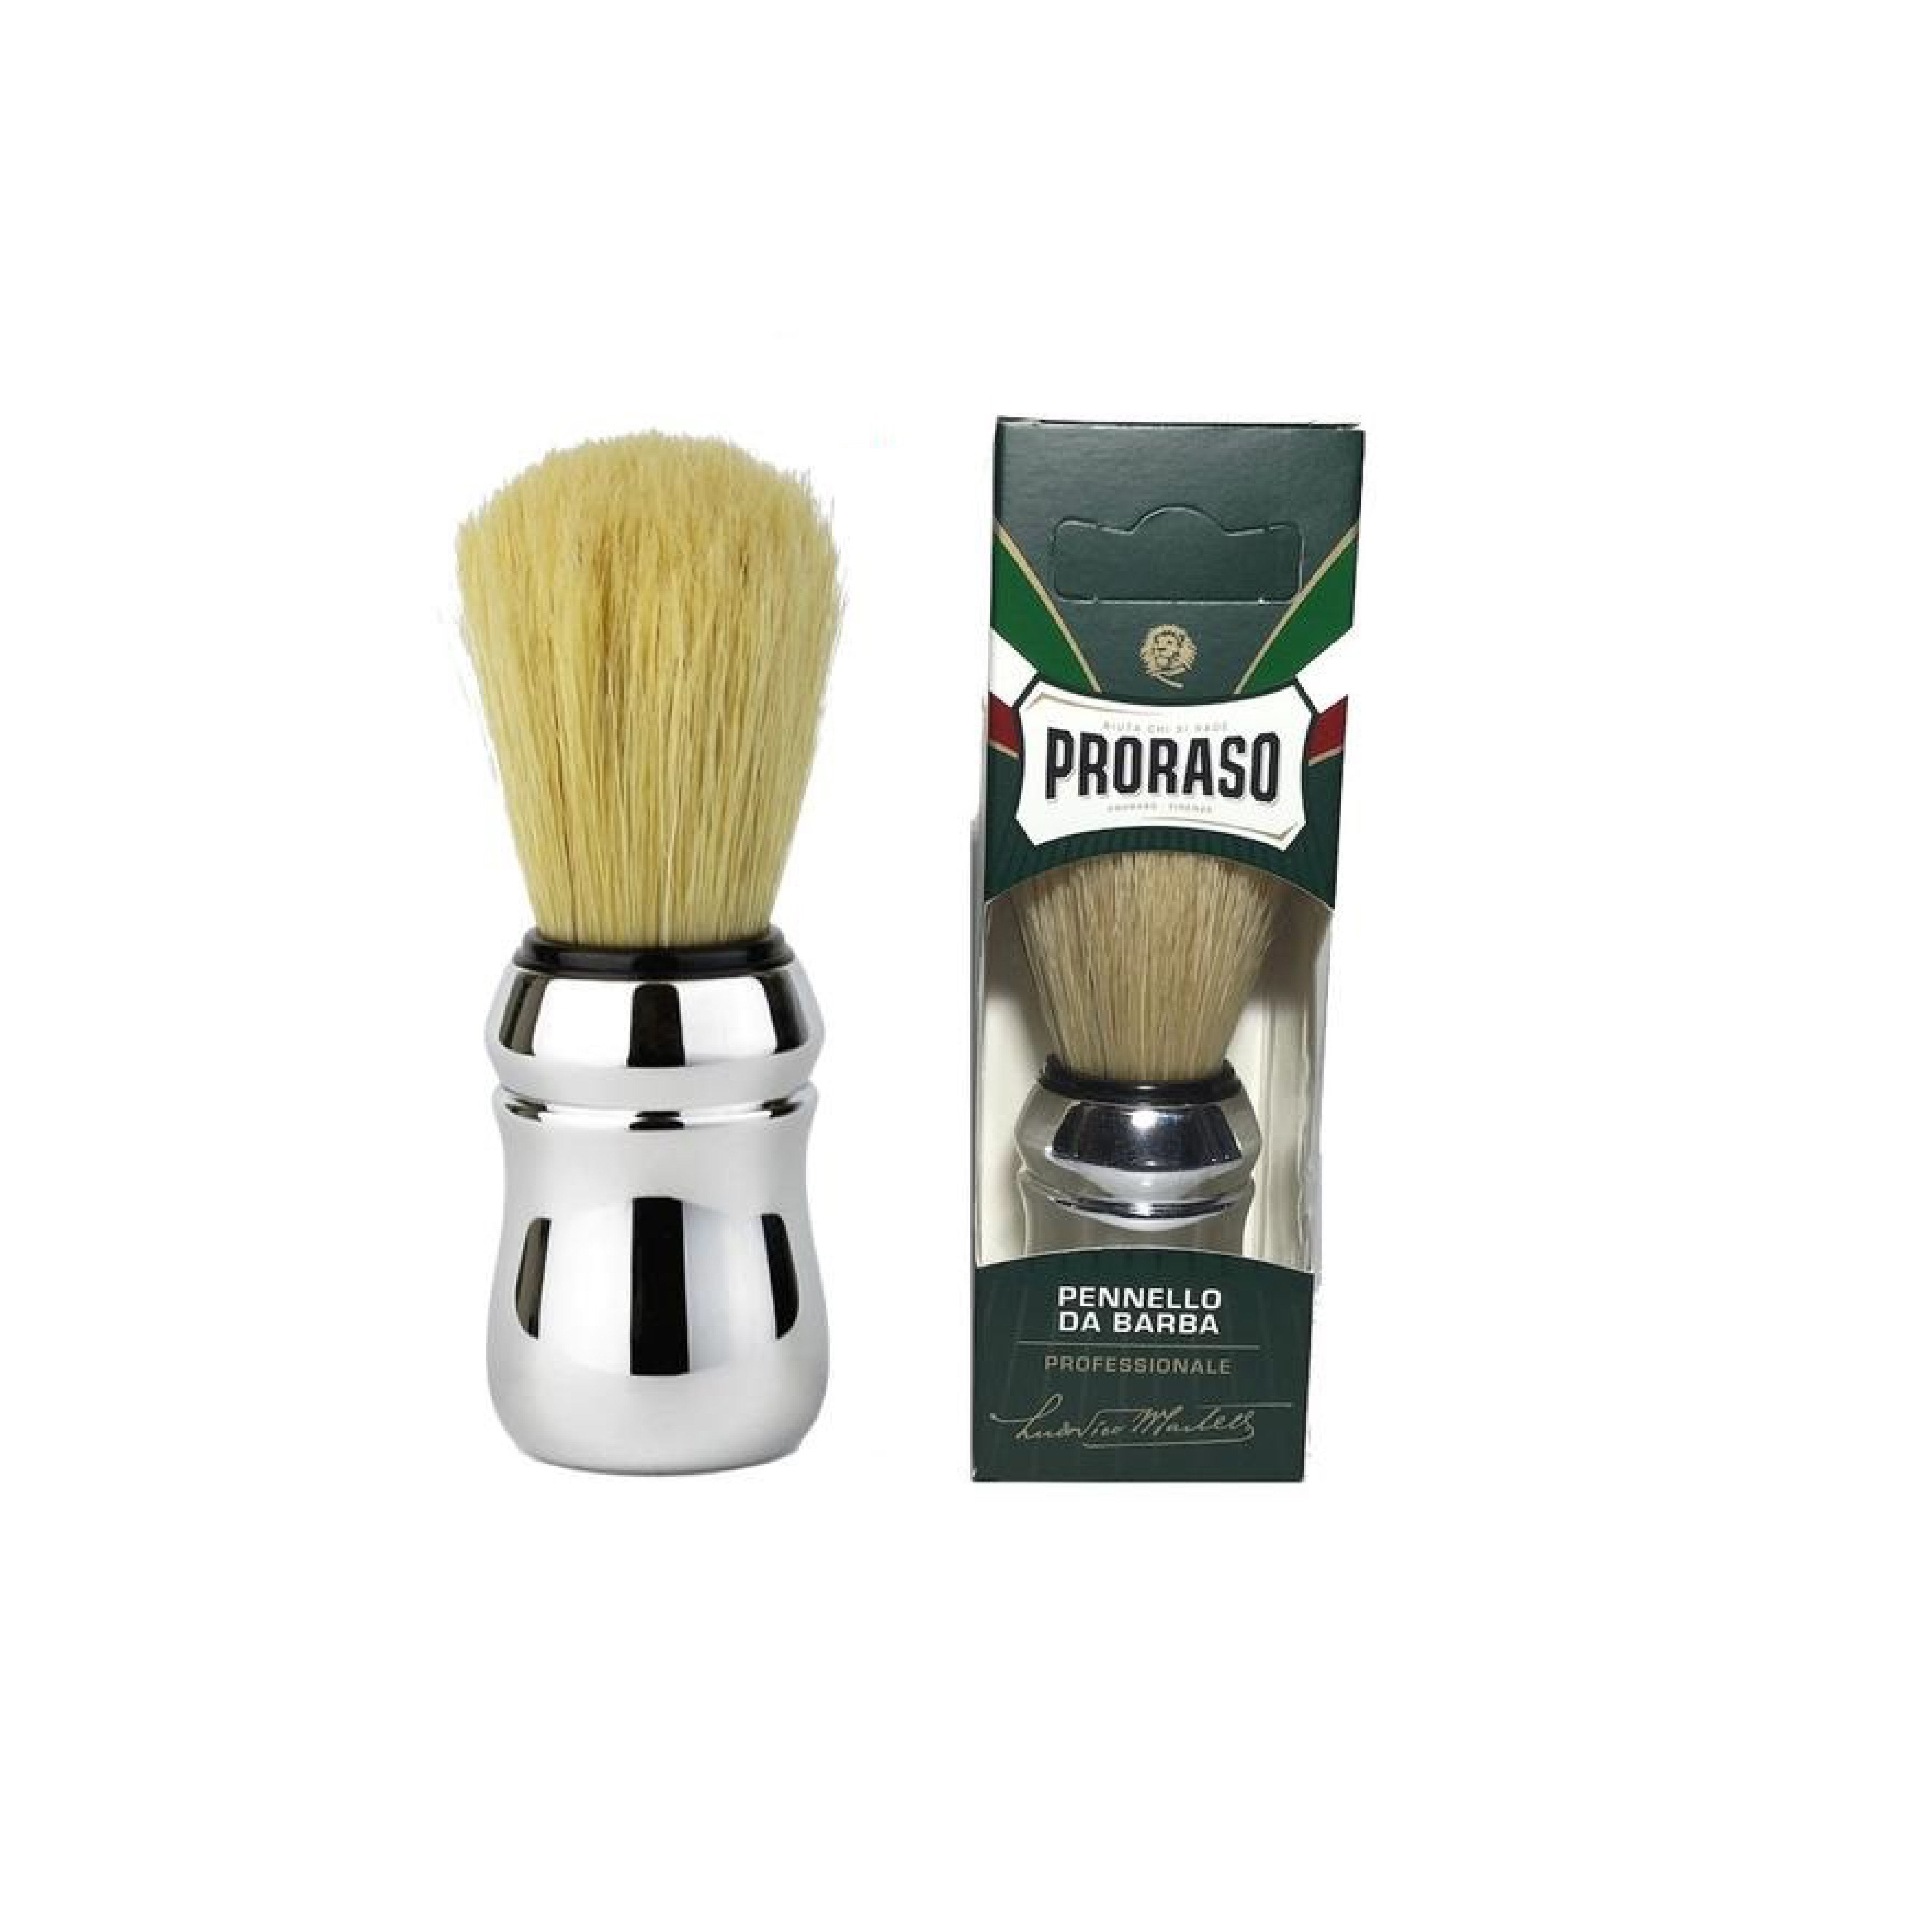 Proraso Professional Shaving Brush - Barber Bazaar